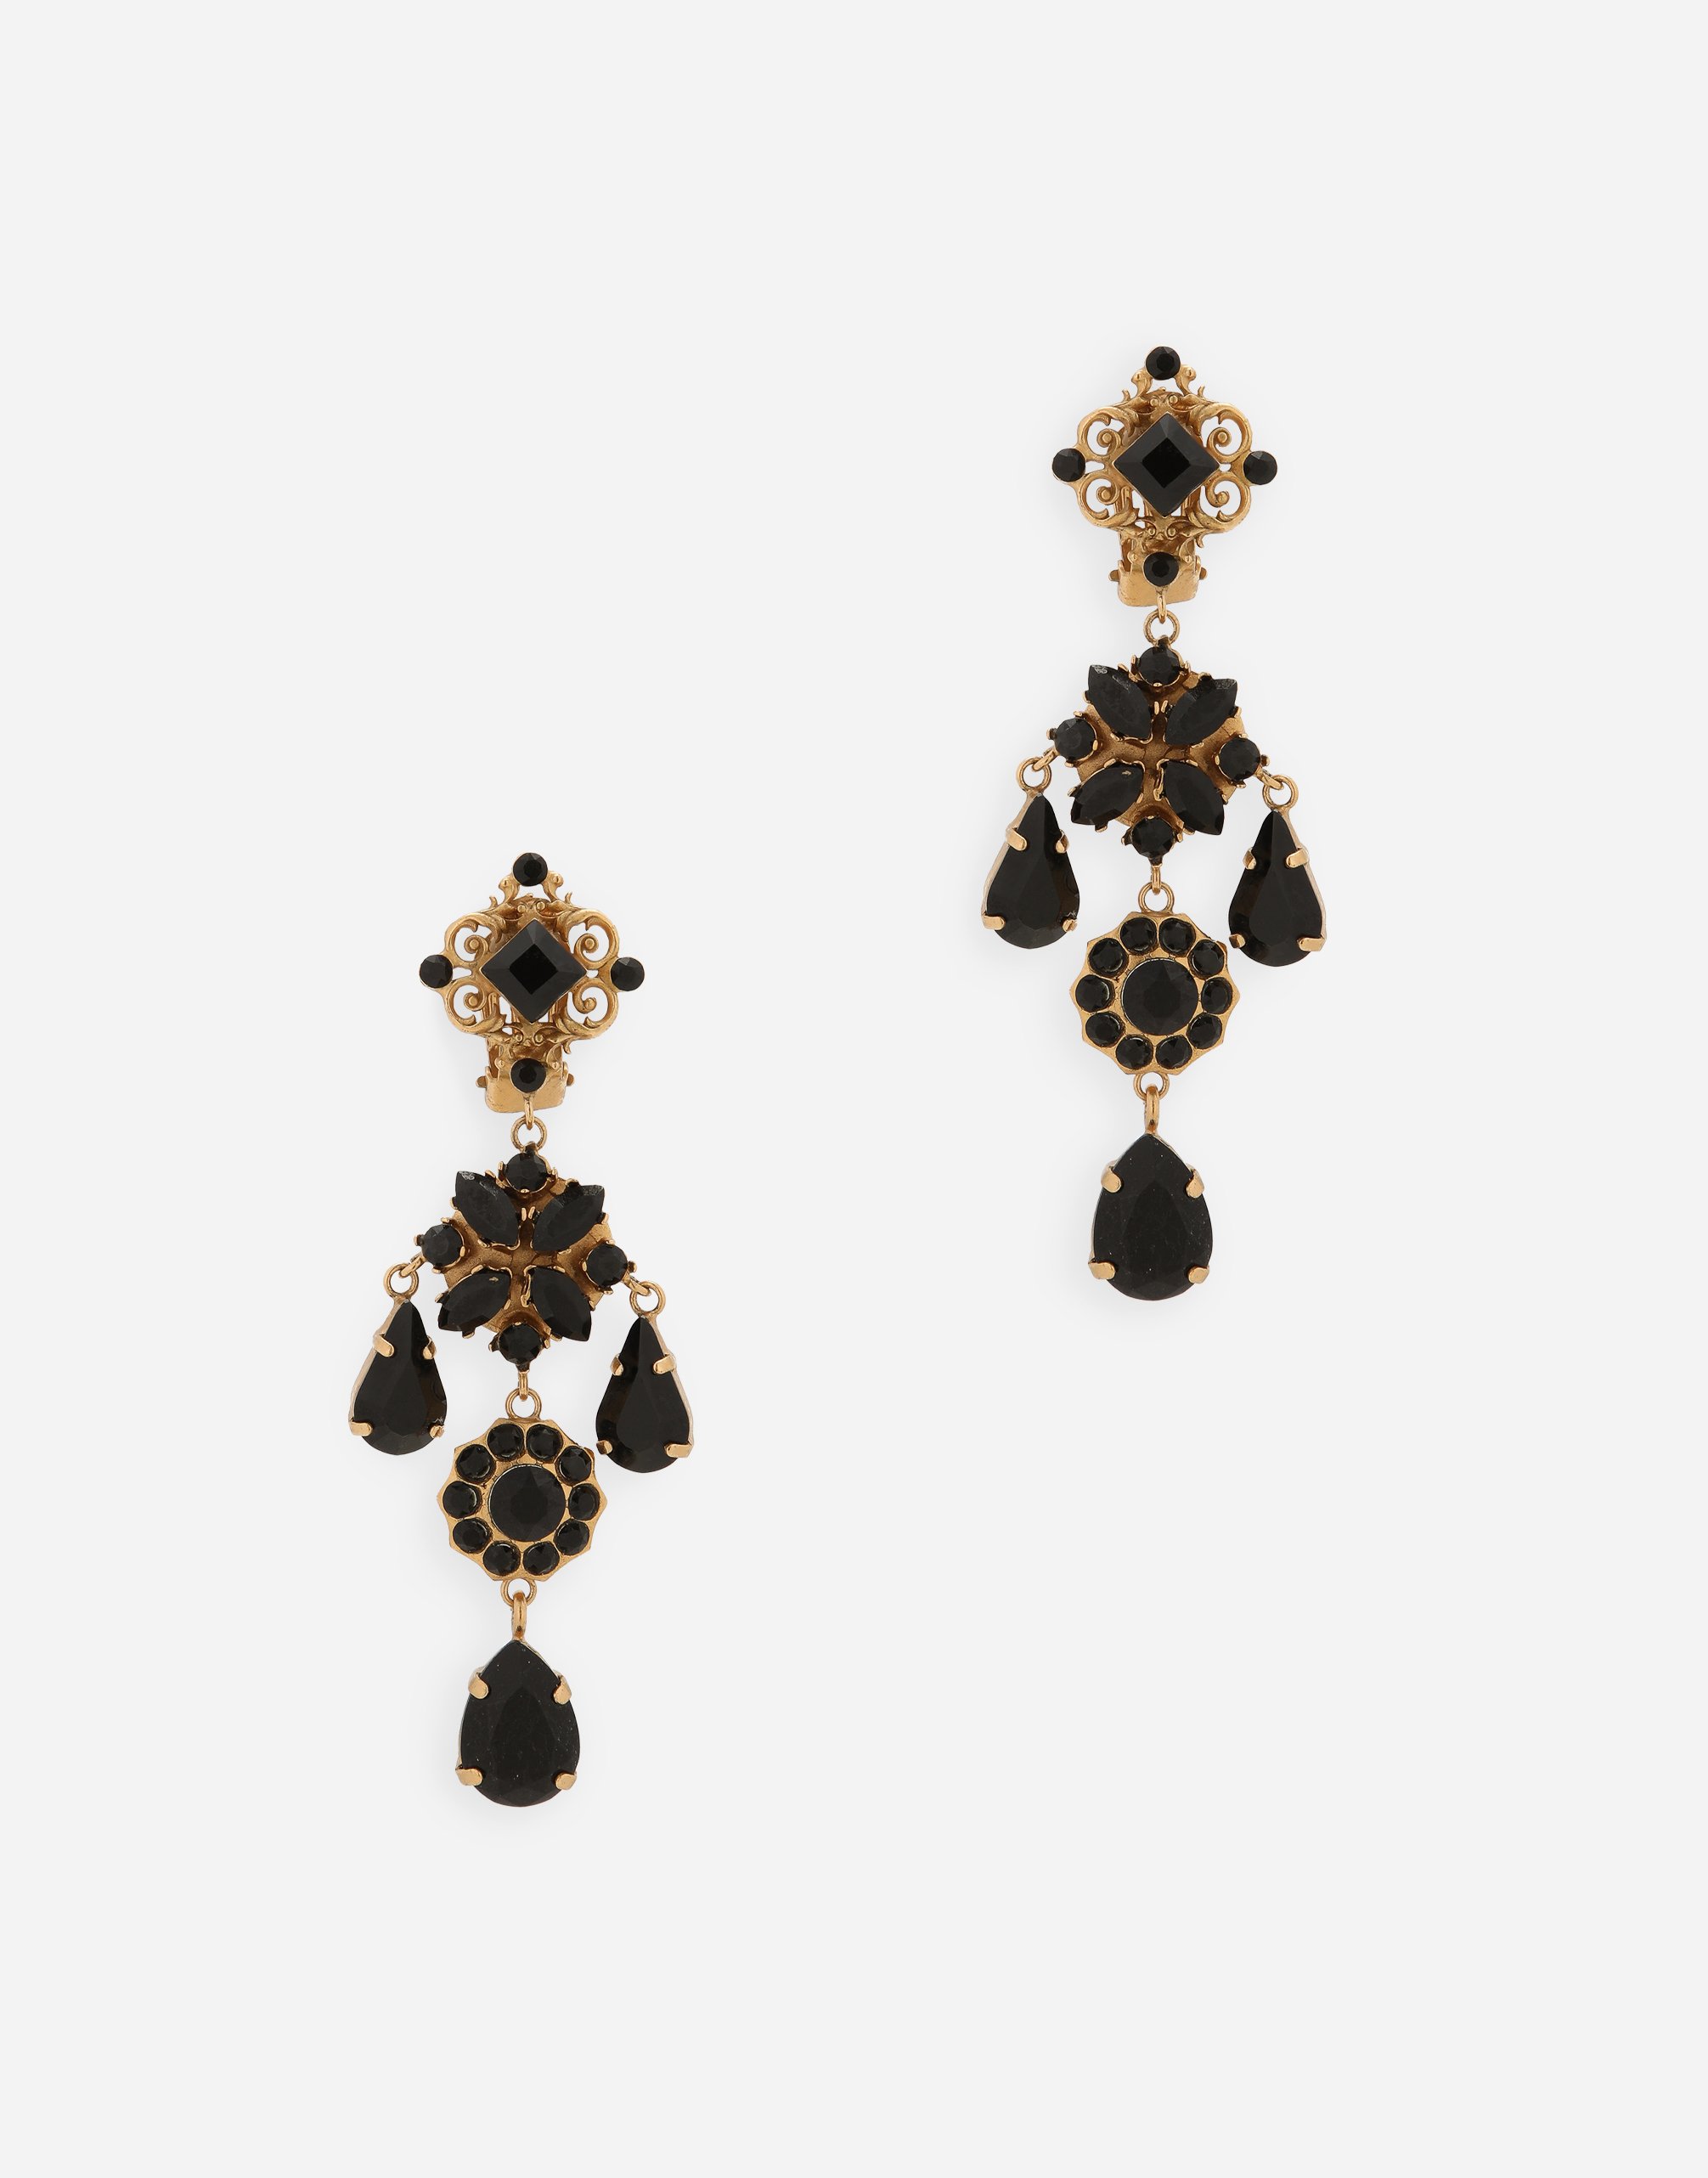 Drop earrings with rhinestone embellishment in Gold